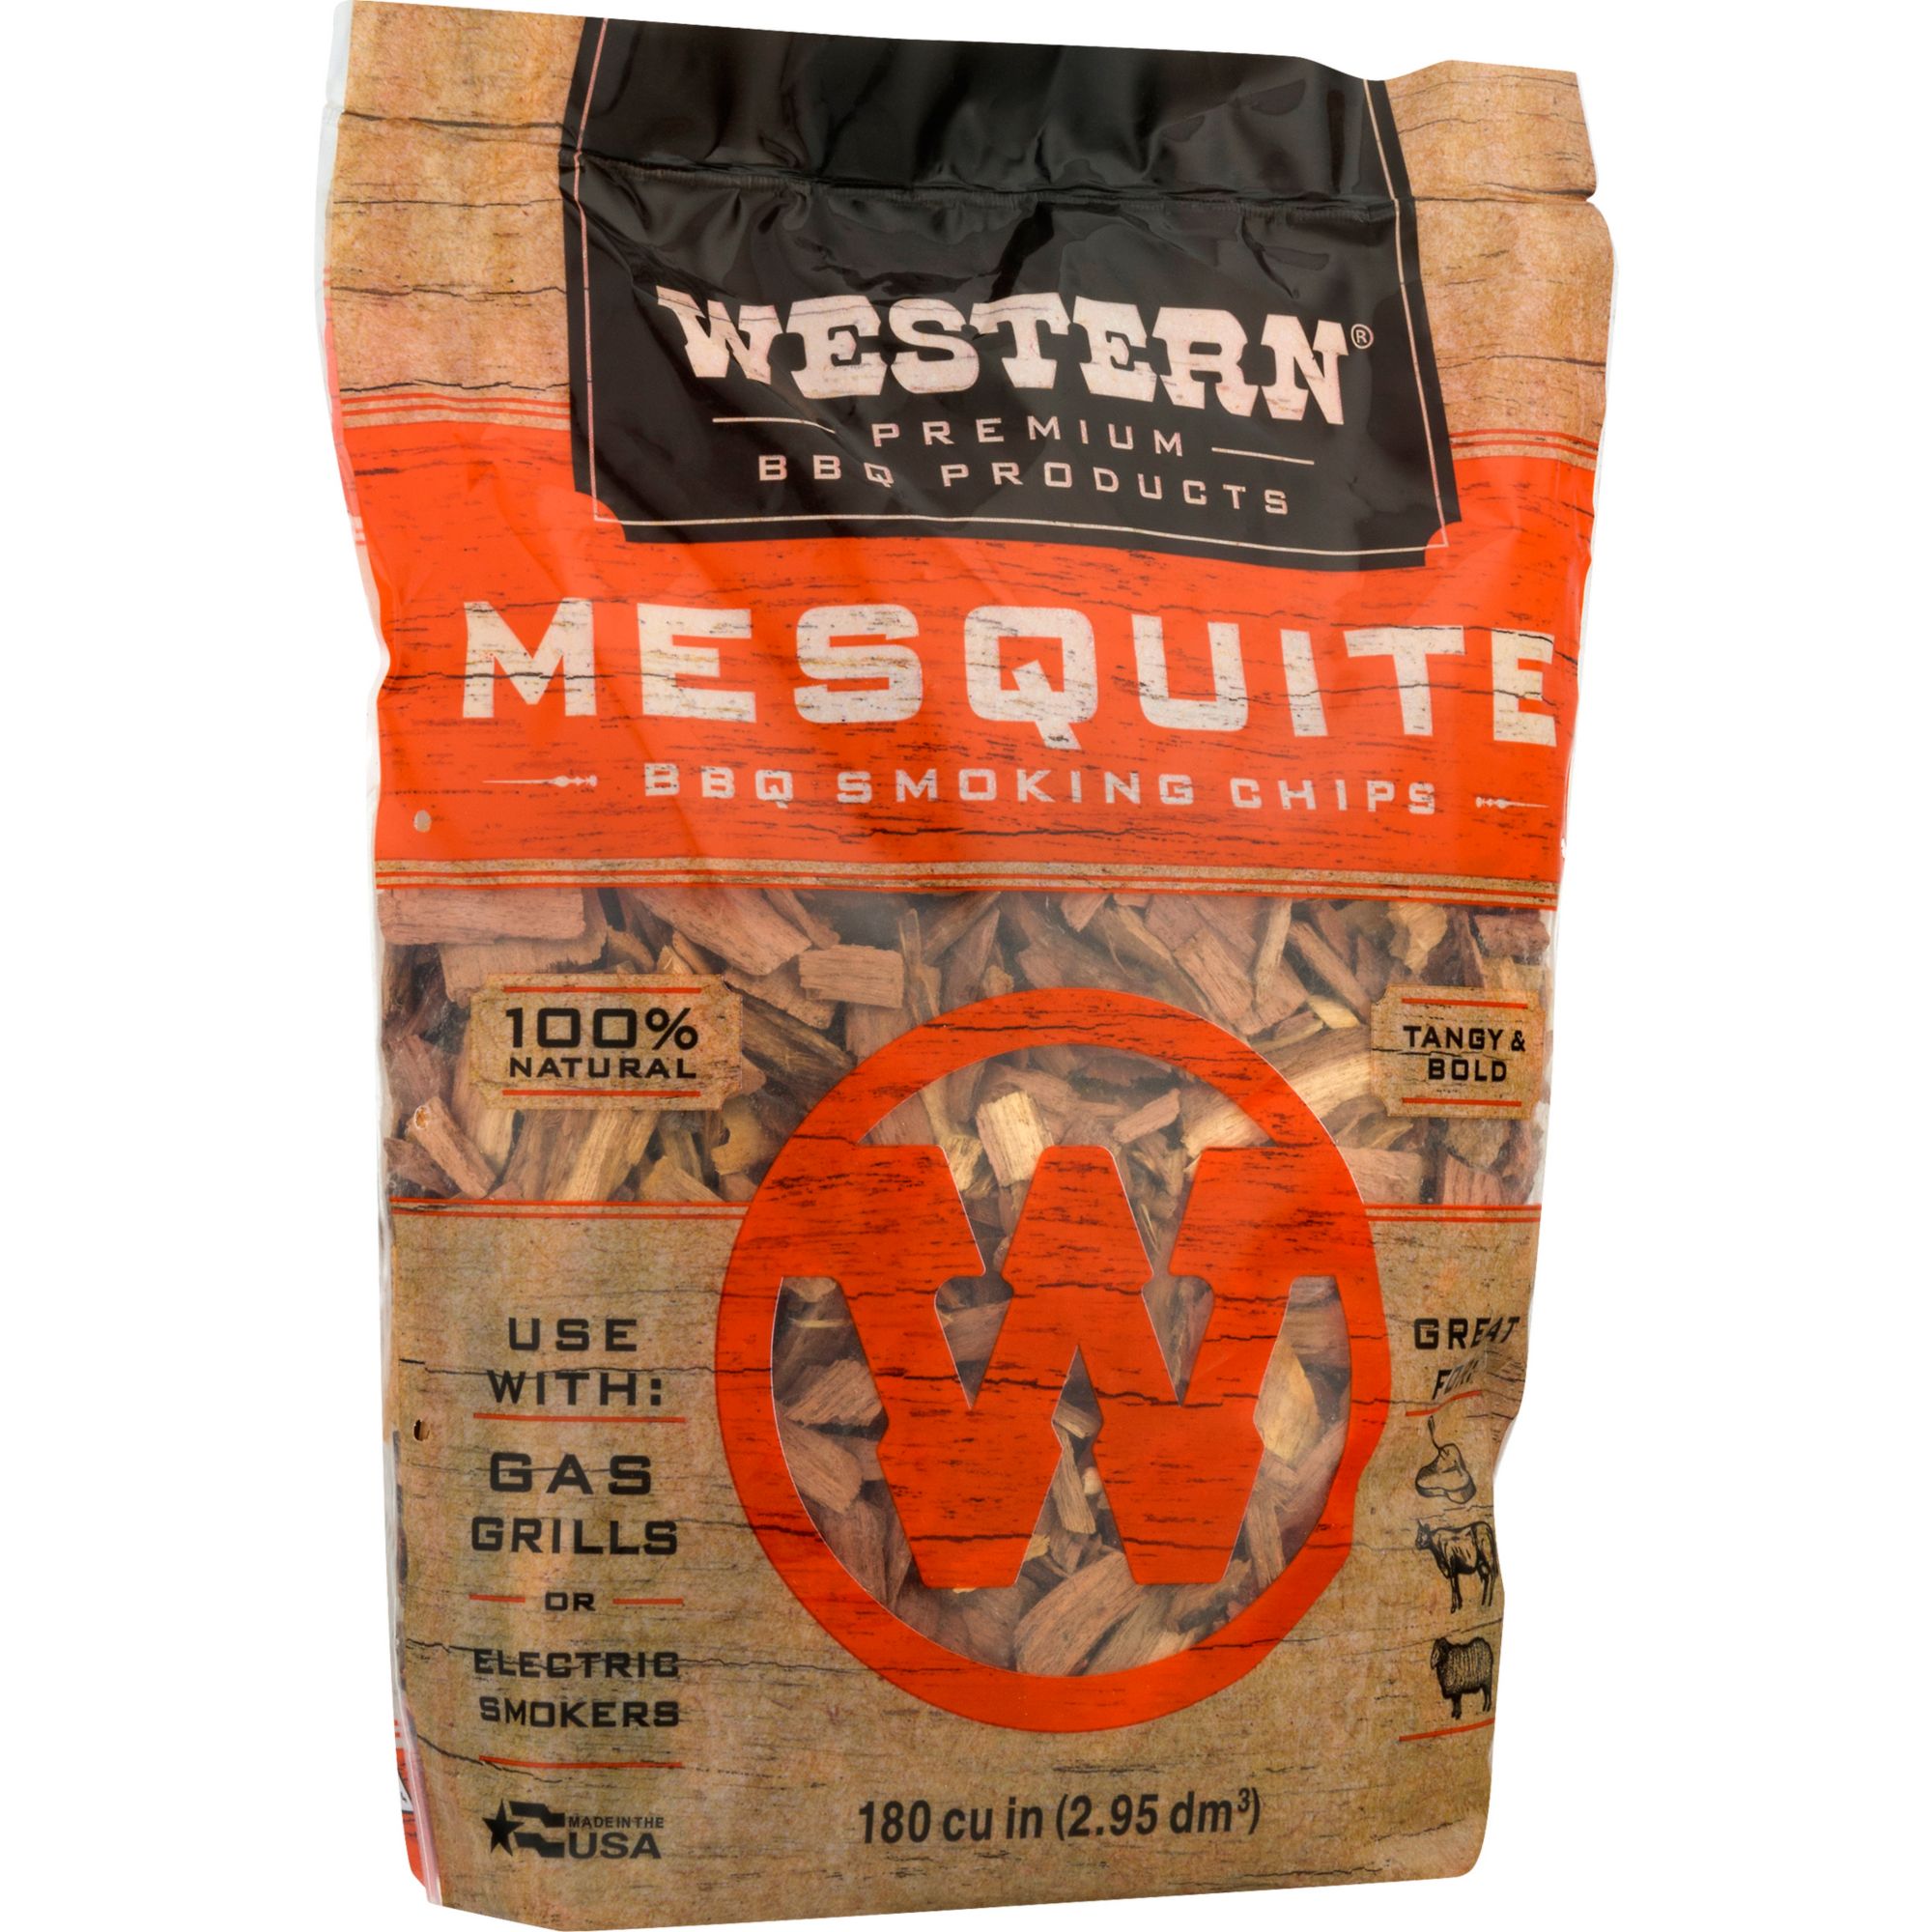 WESTERN BBQ Mesquite Smoking Chips